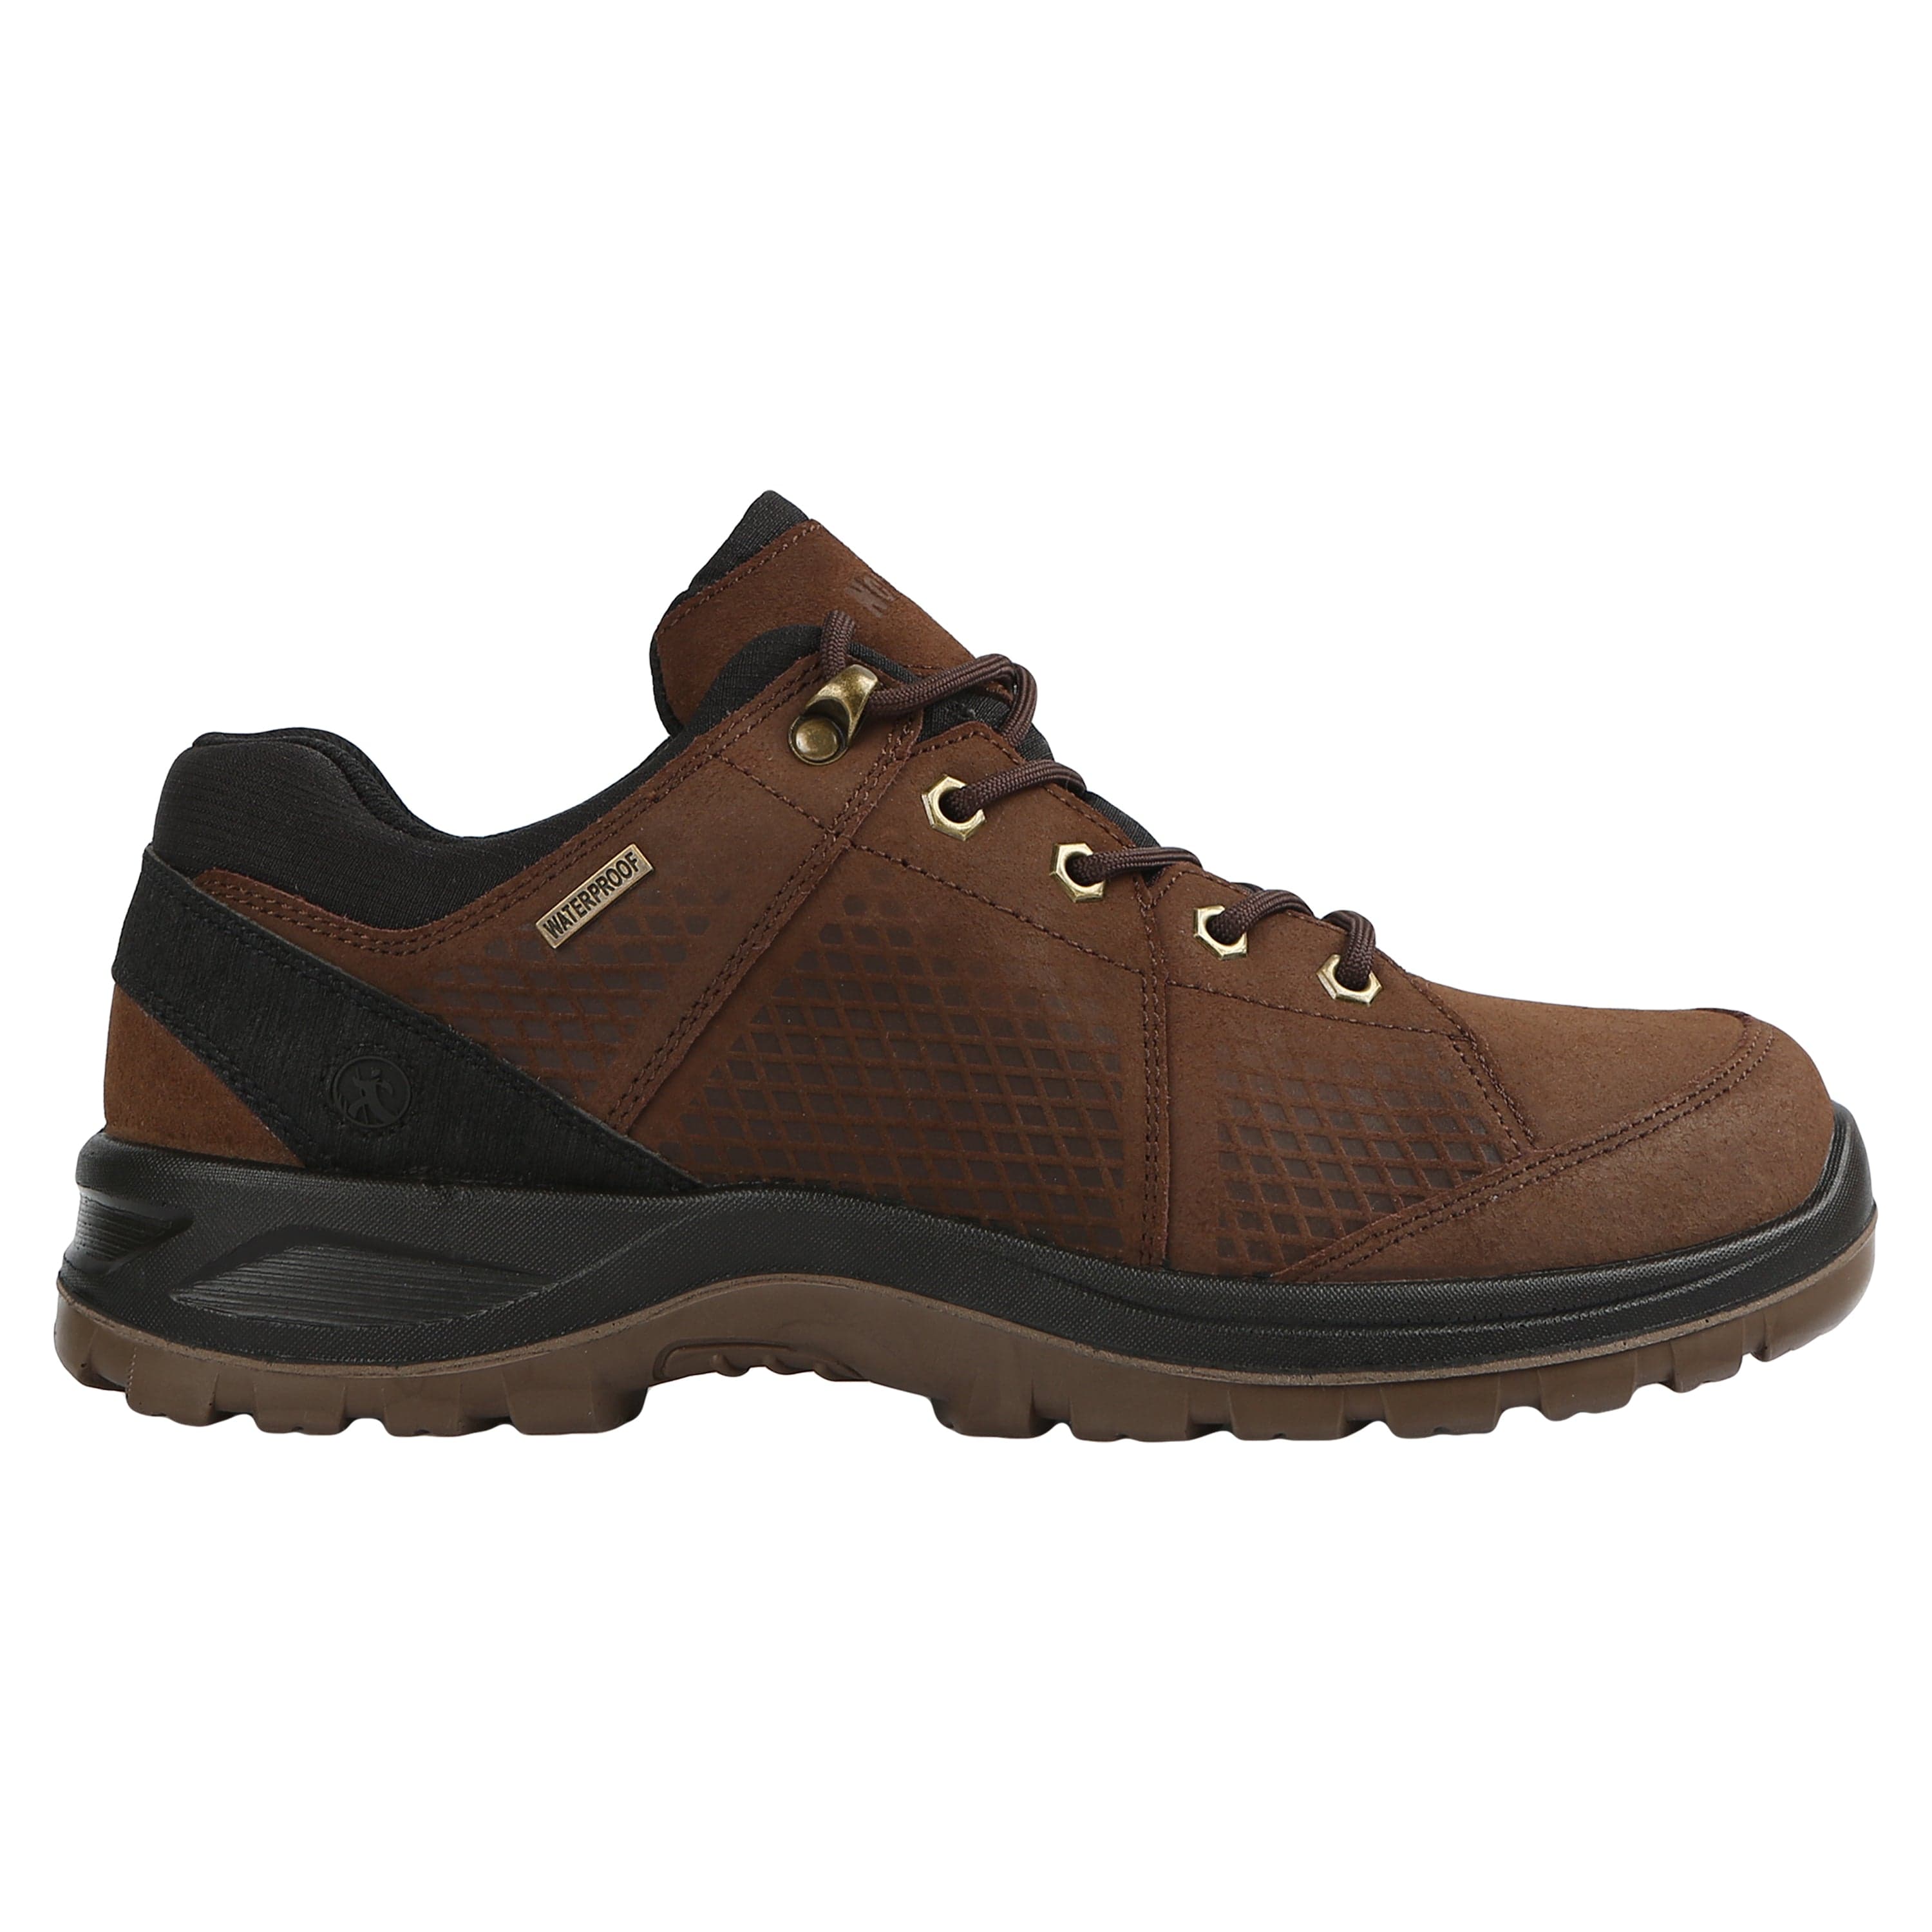 Men's Rockford Waterproof Leather Hiking Shoe - Northside USA